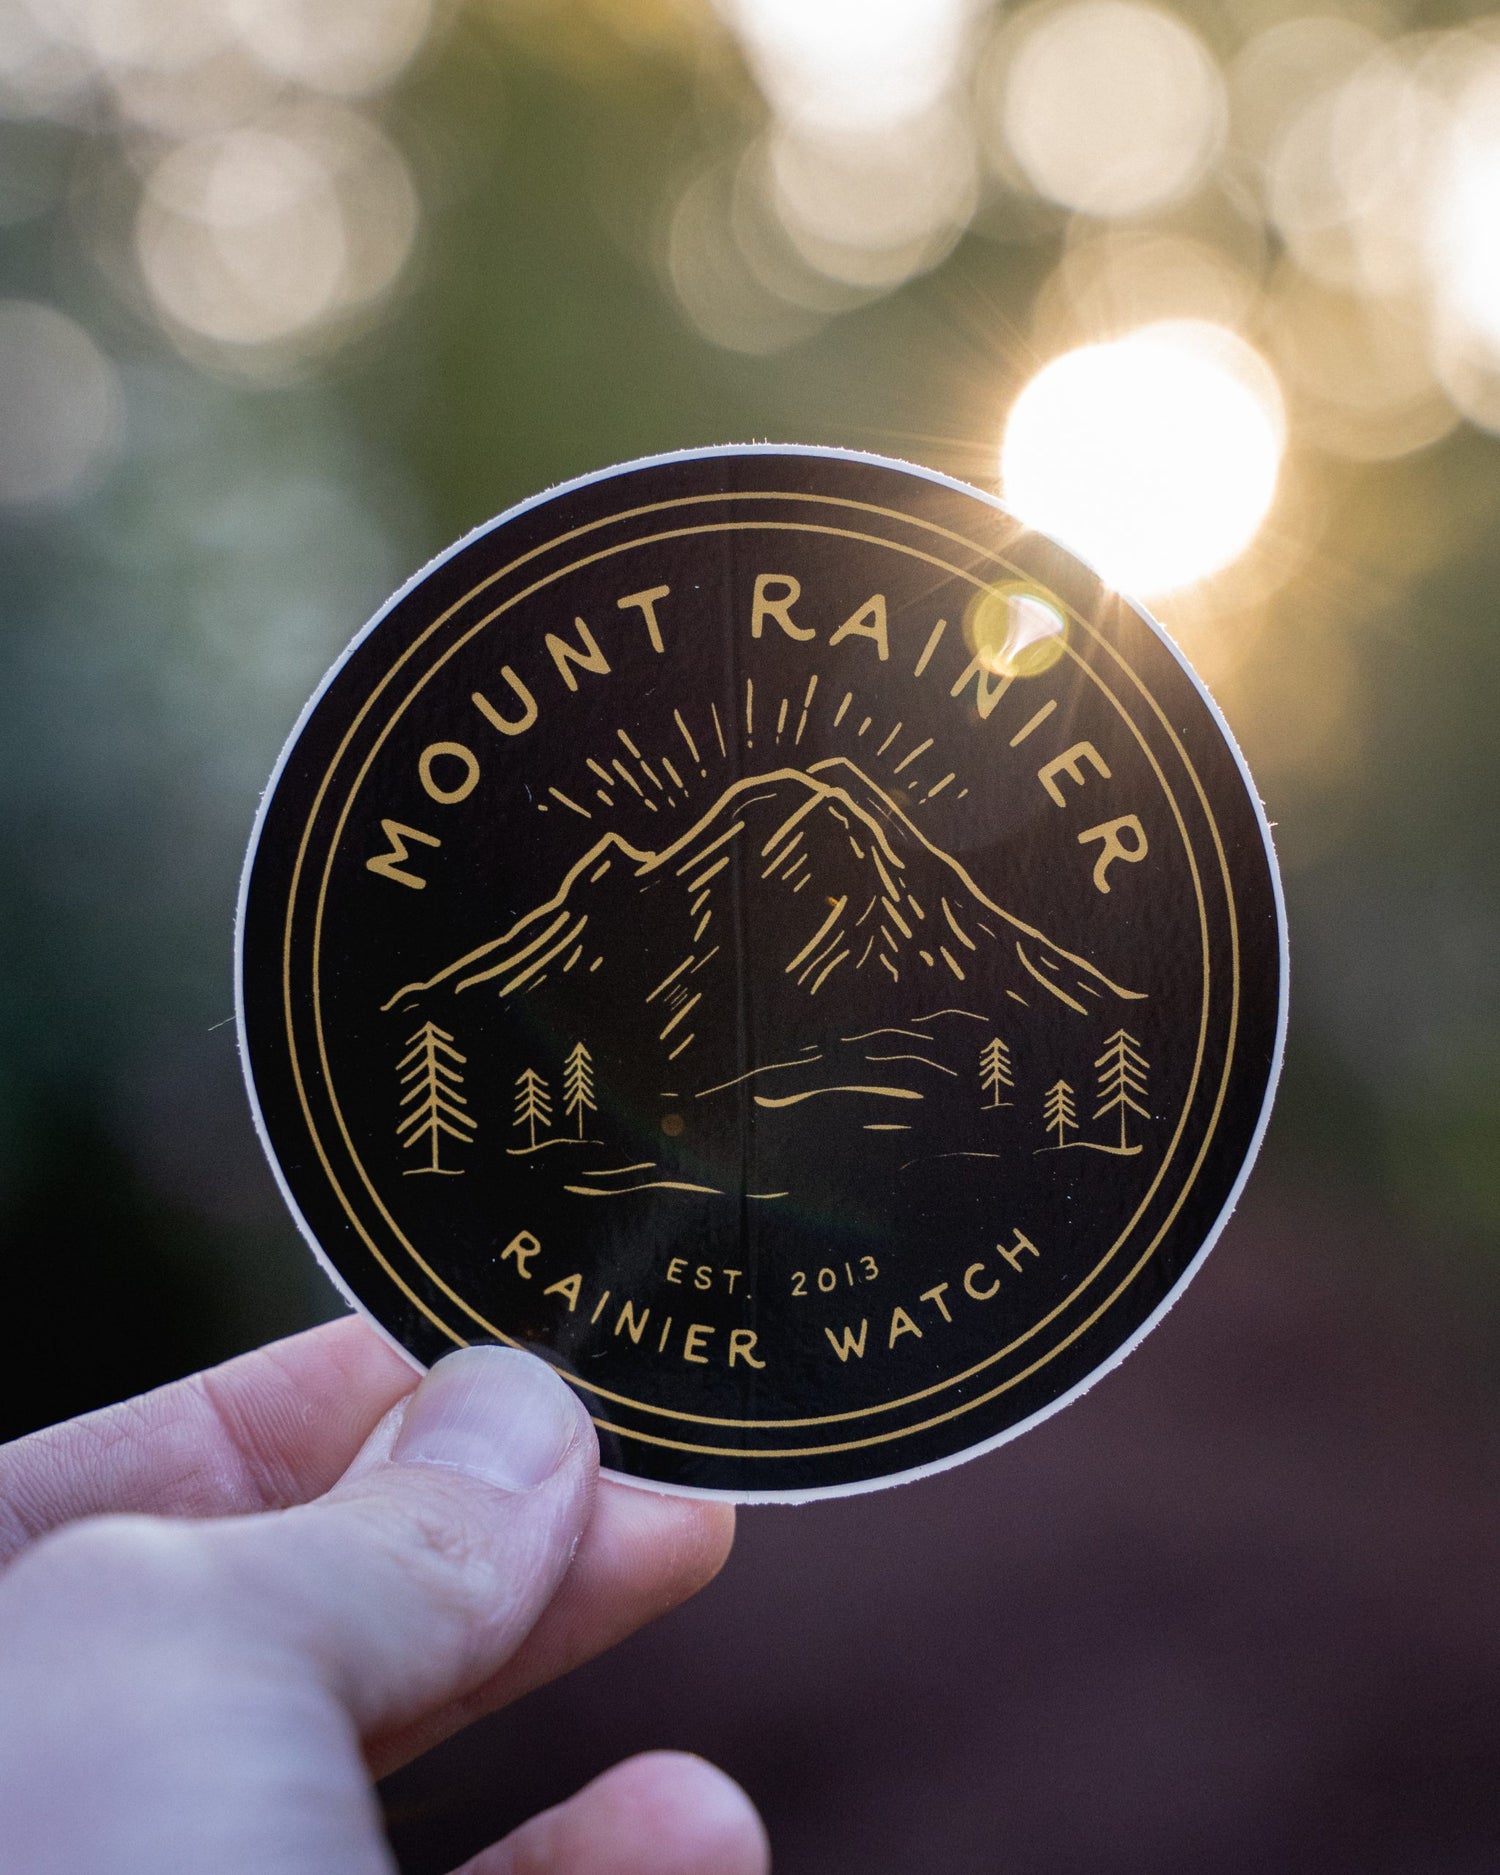 Mount Rainier Stickers